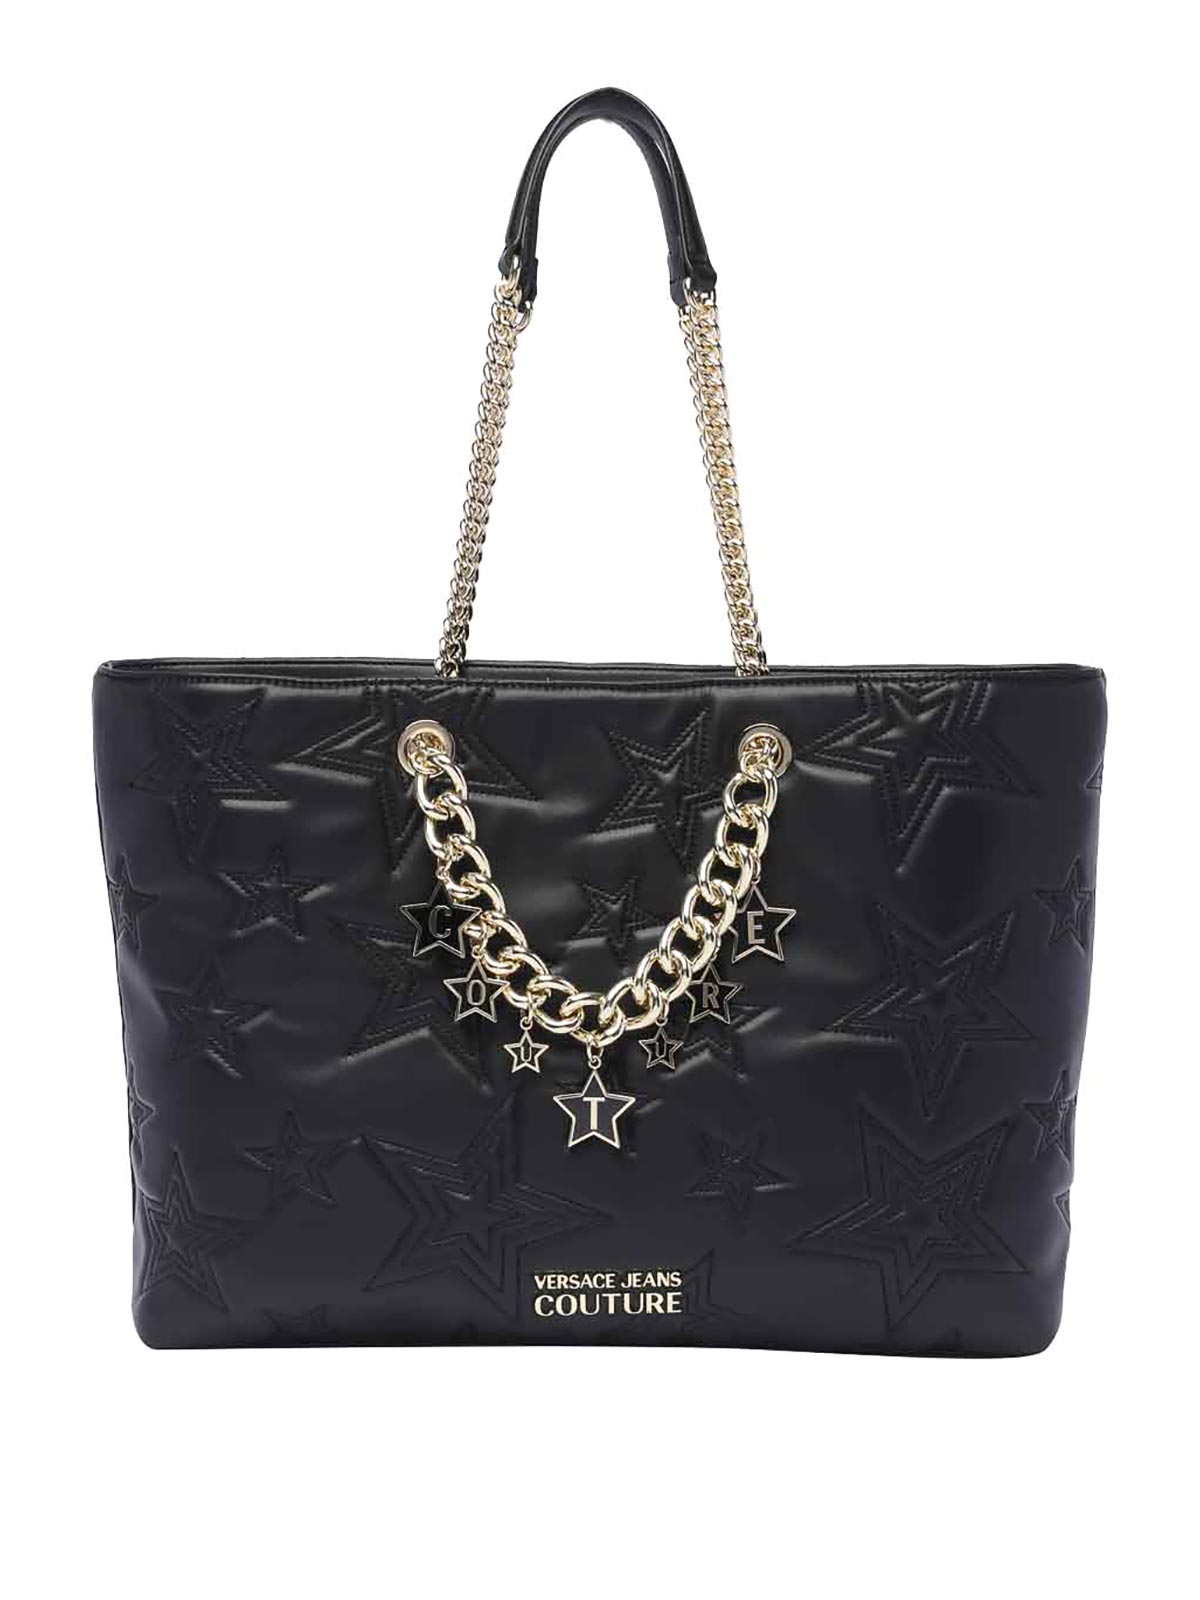 Versace Jeans Couture shoulder bag with big logo